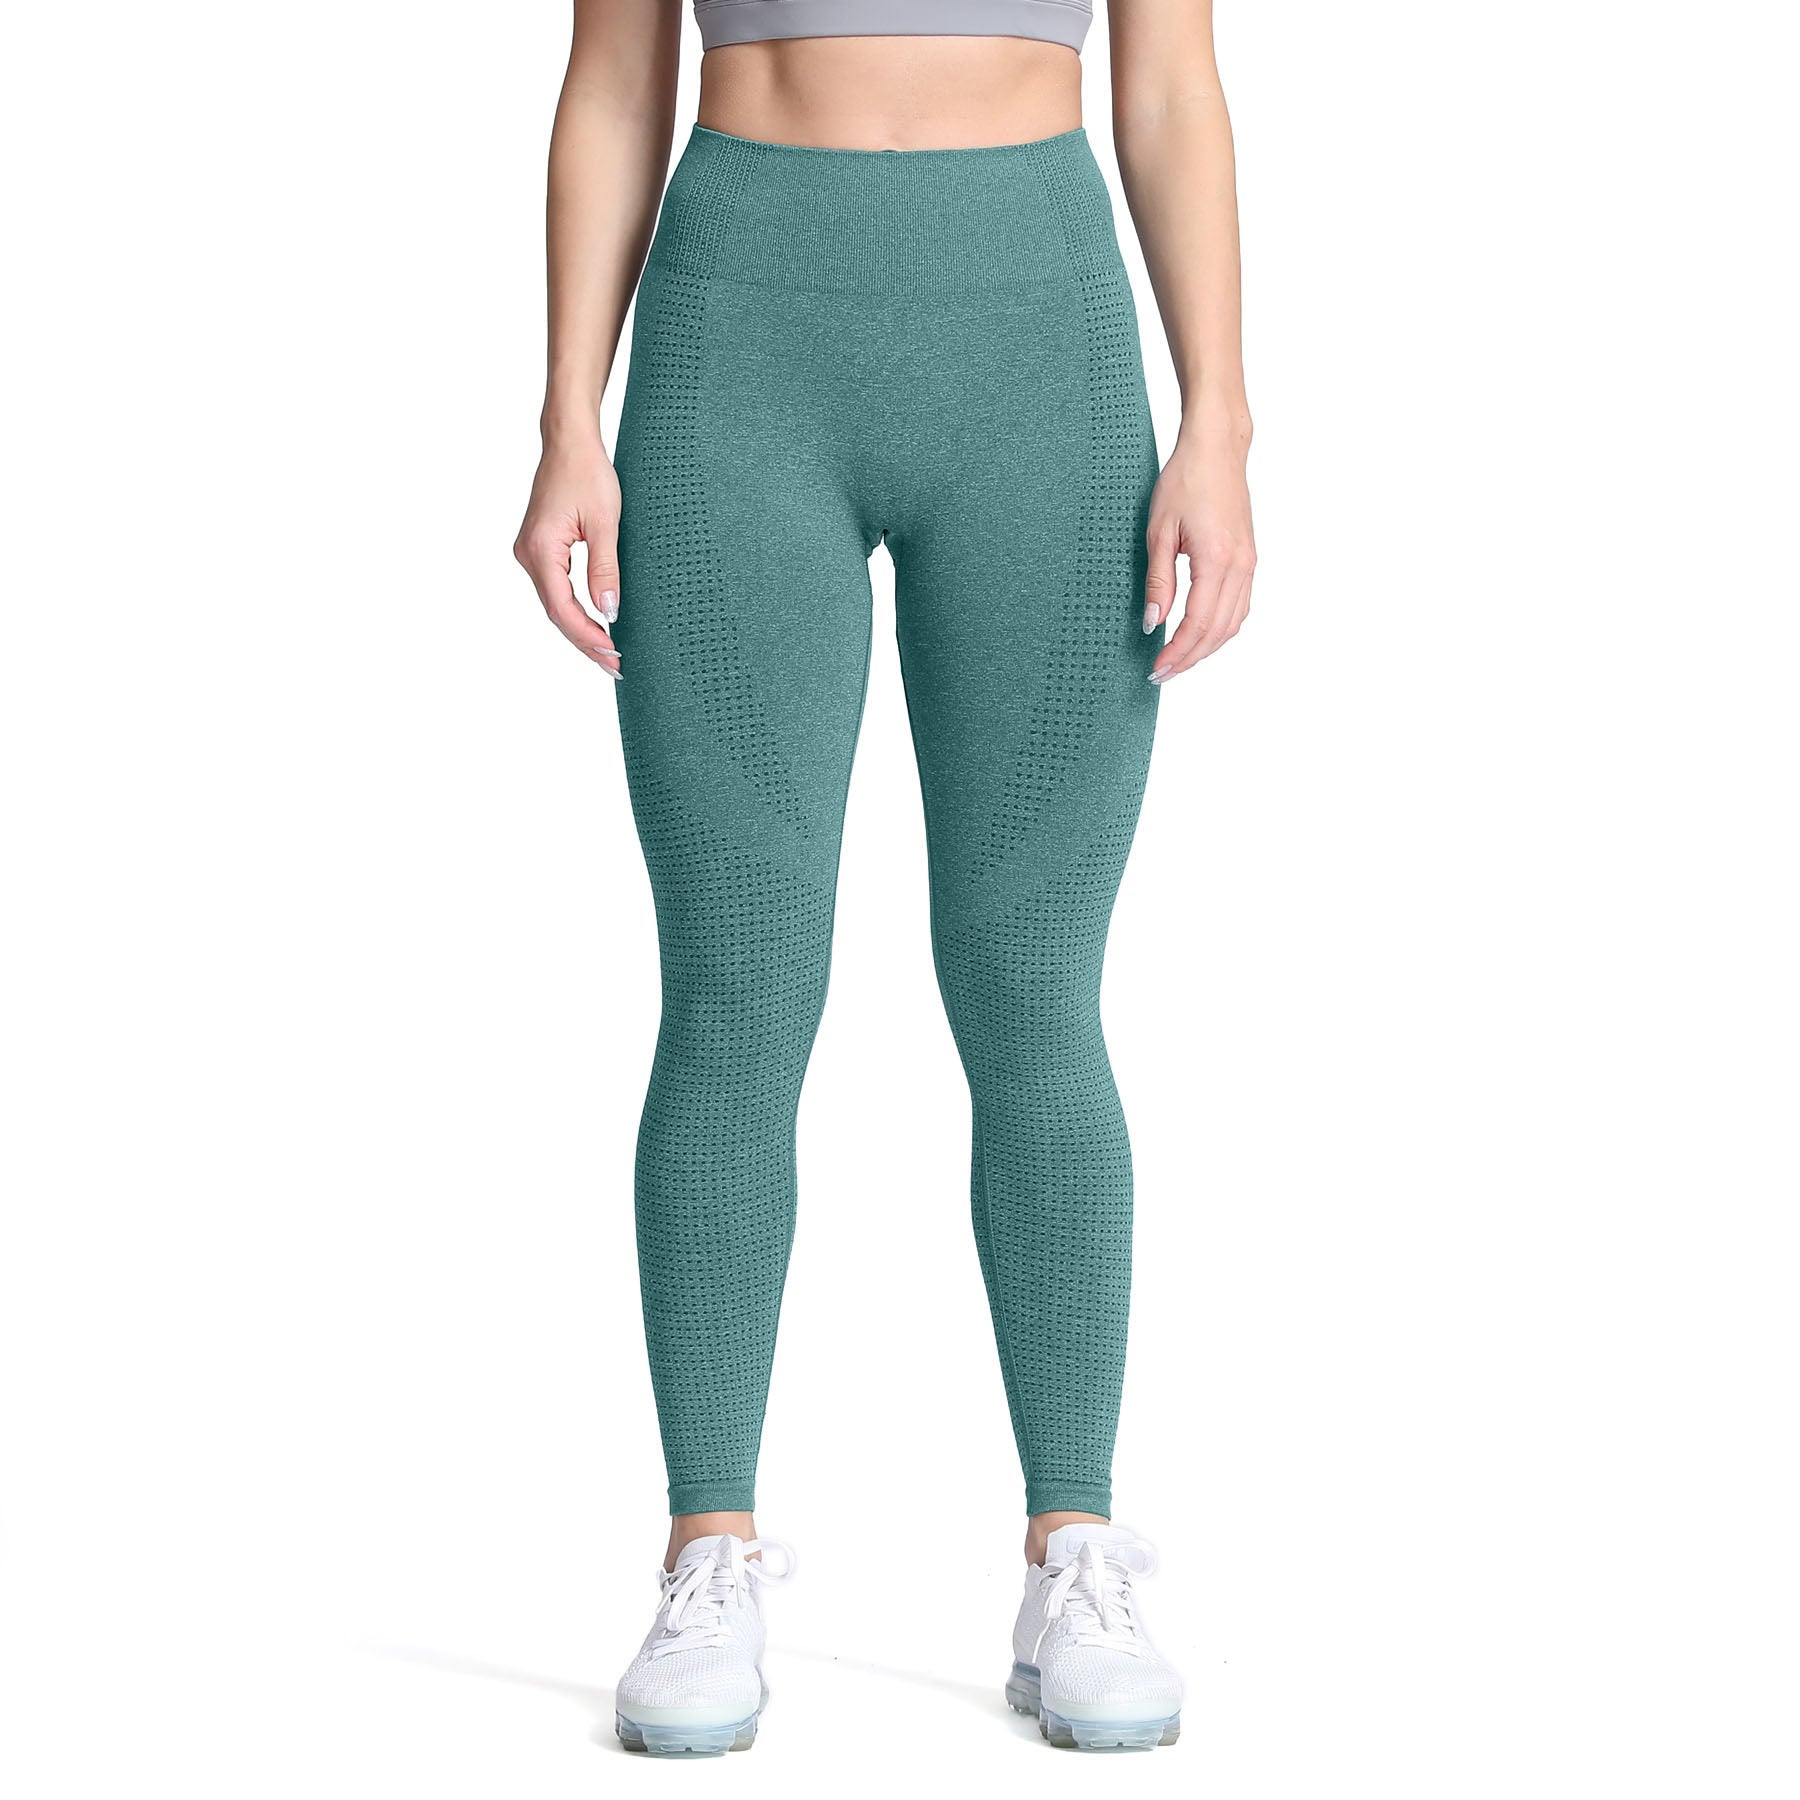 Aoxjox Women's High Waist Workout Gym Vital Seamless Leggings Yoga Pants  (Khaki Marl, Medium), Khaki, Medium 